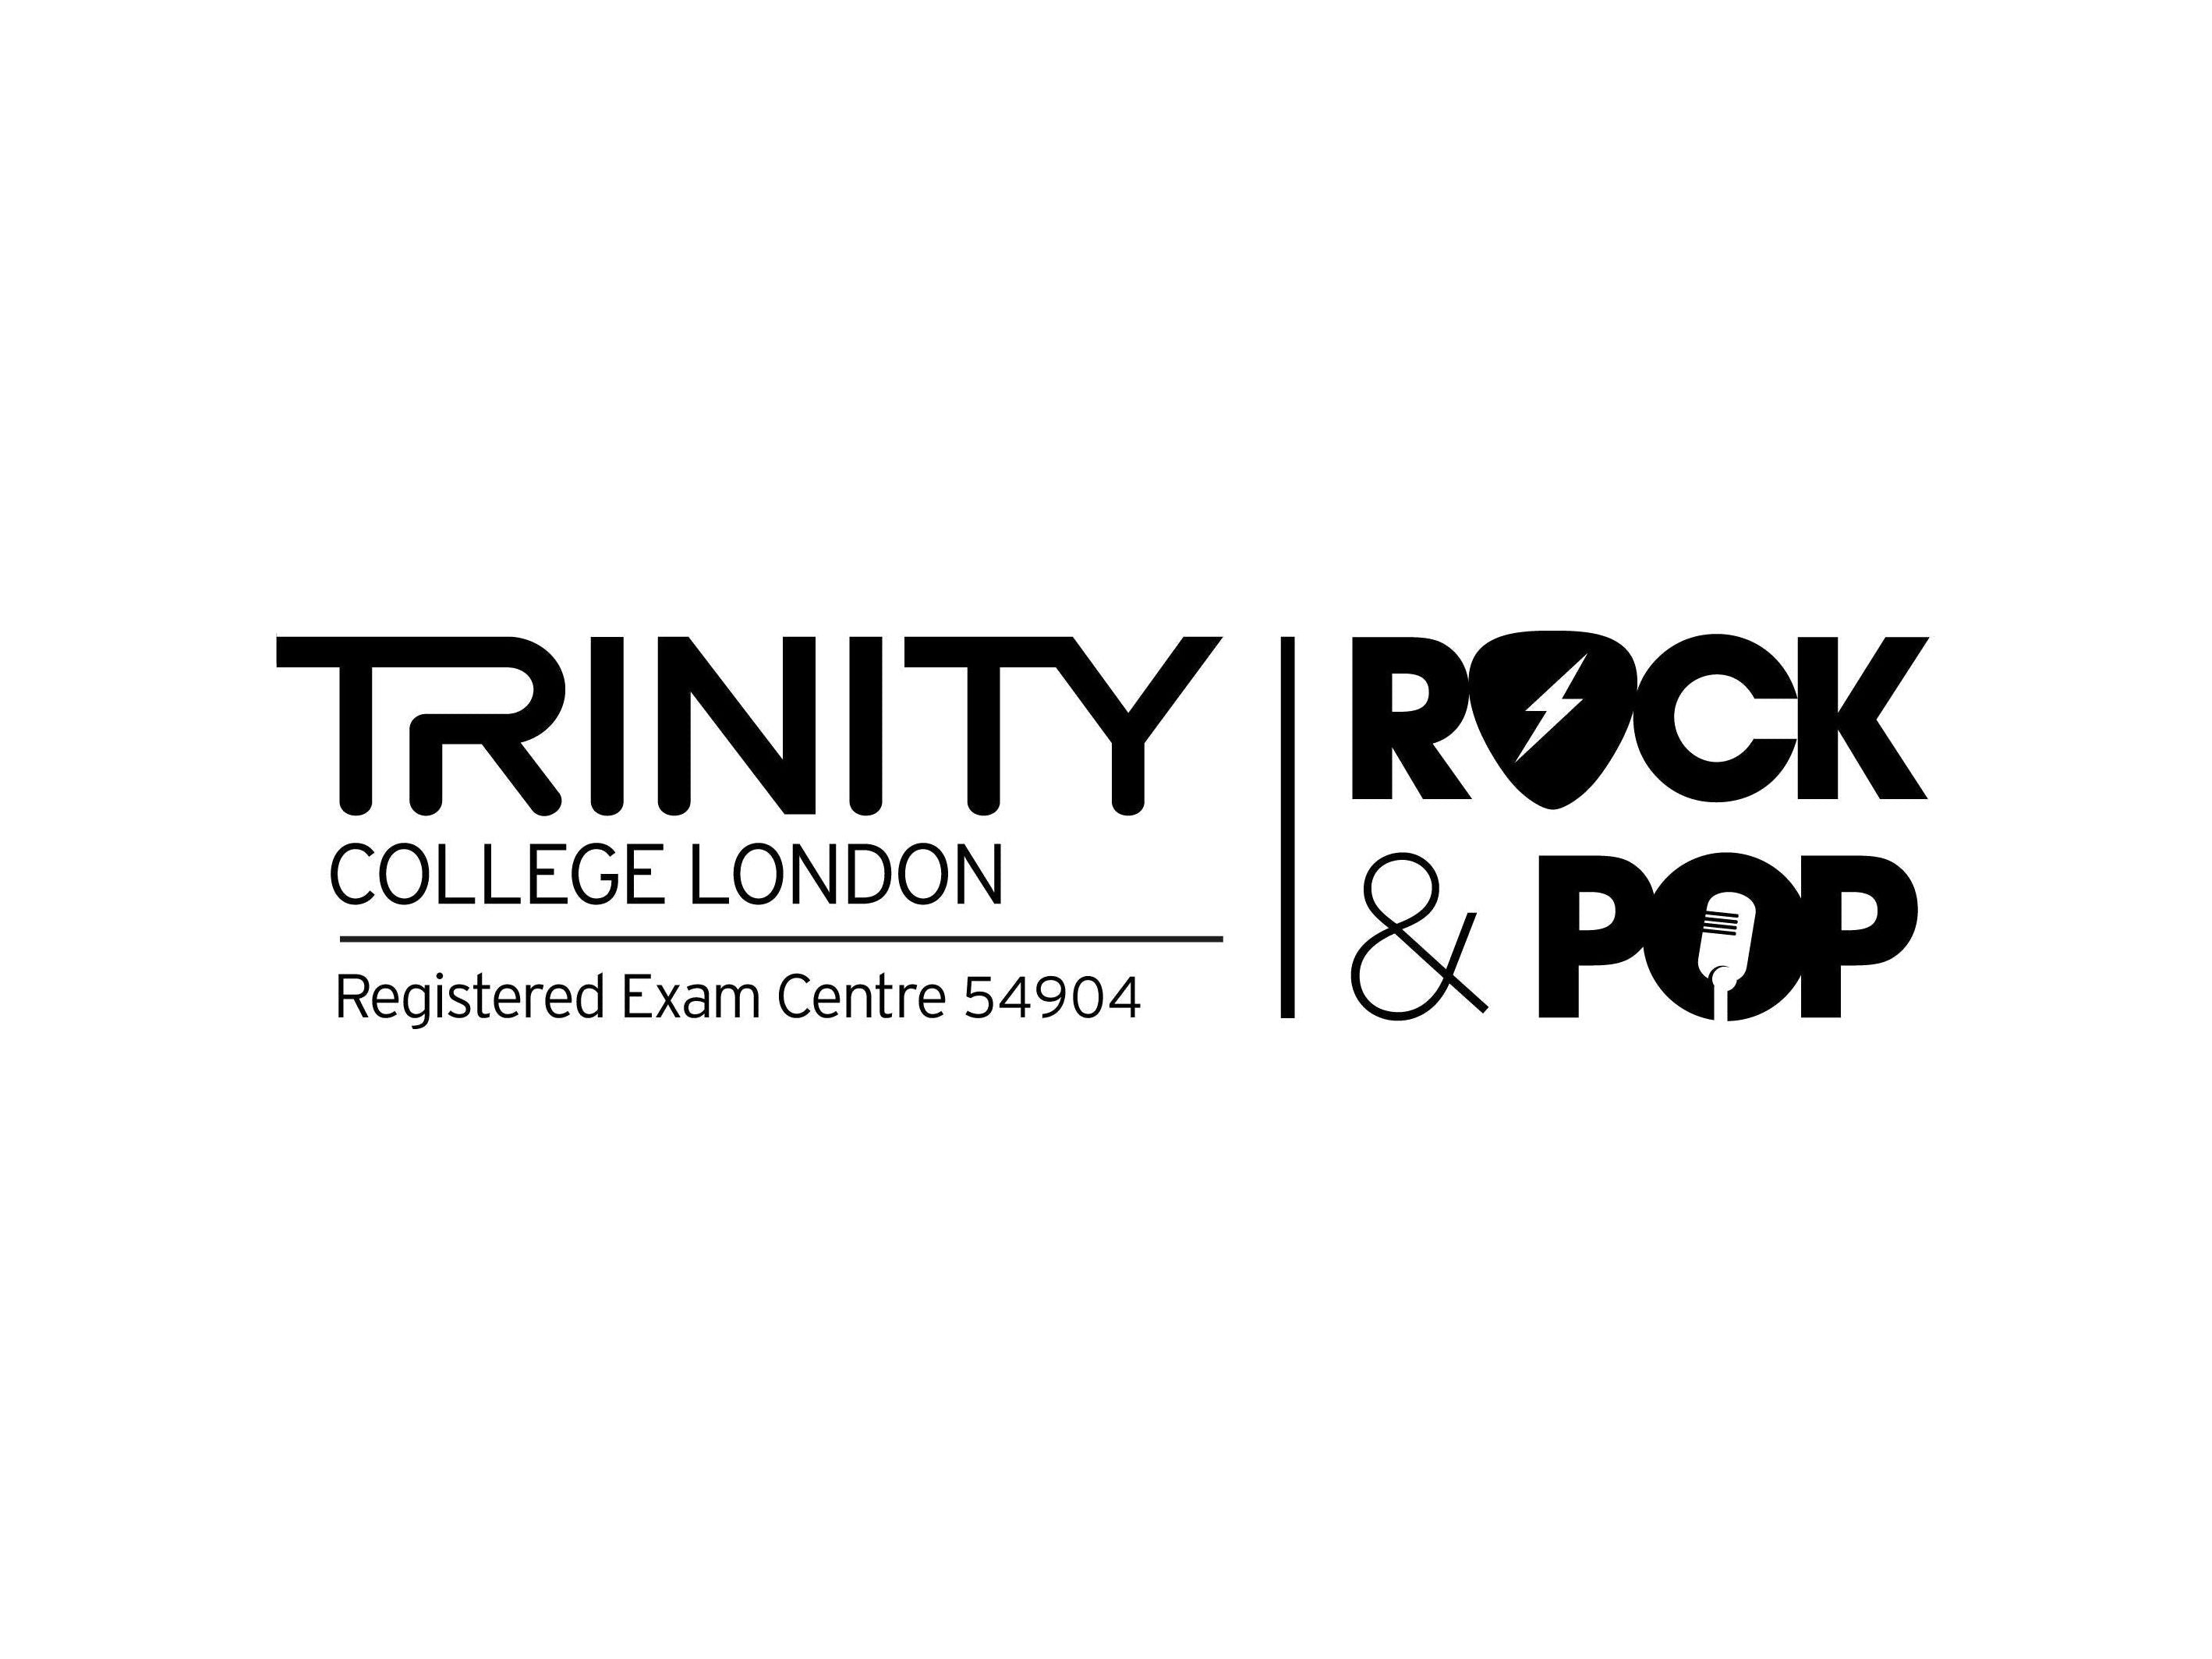 Trinity Rock & Pop Exam - Grade 4